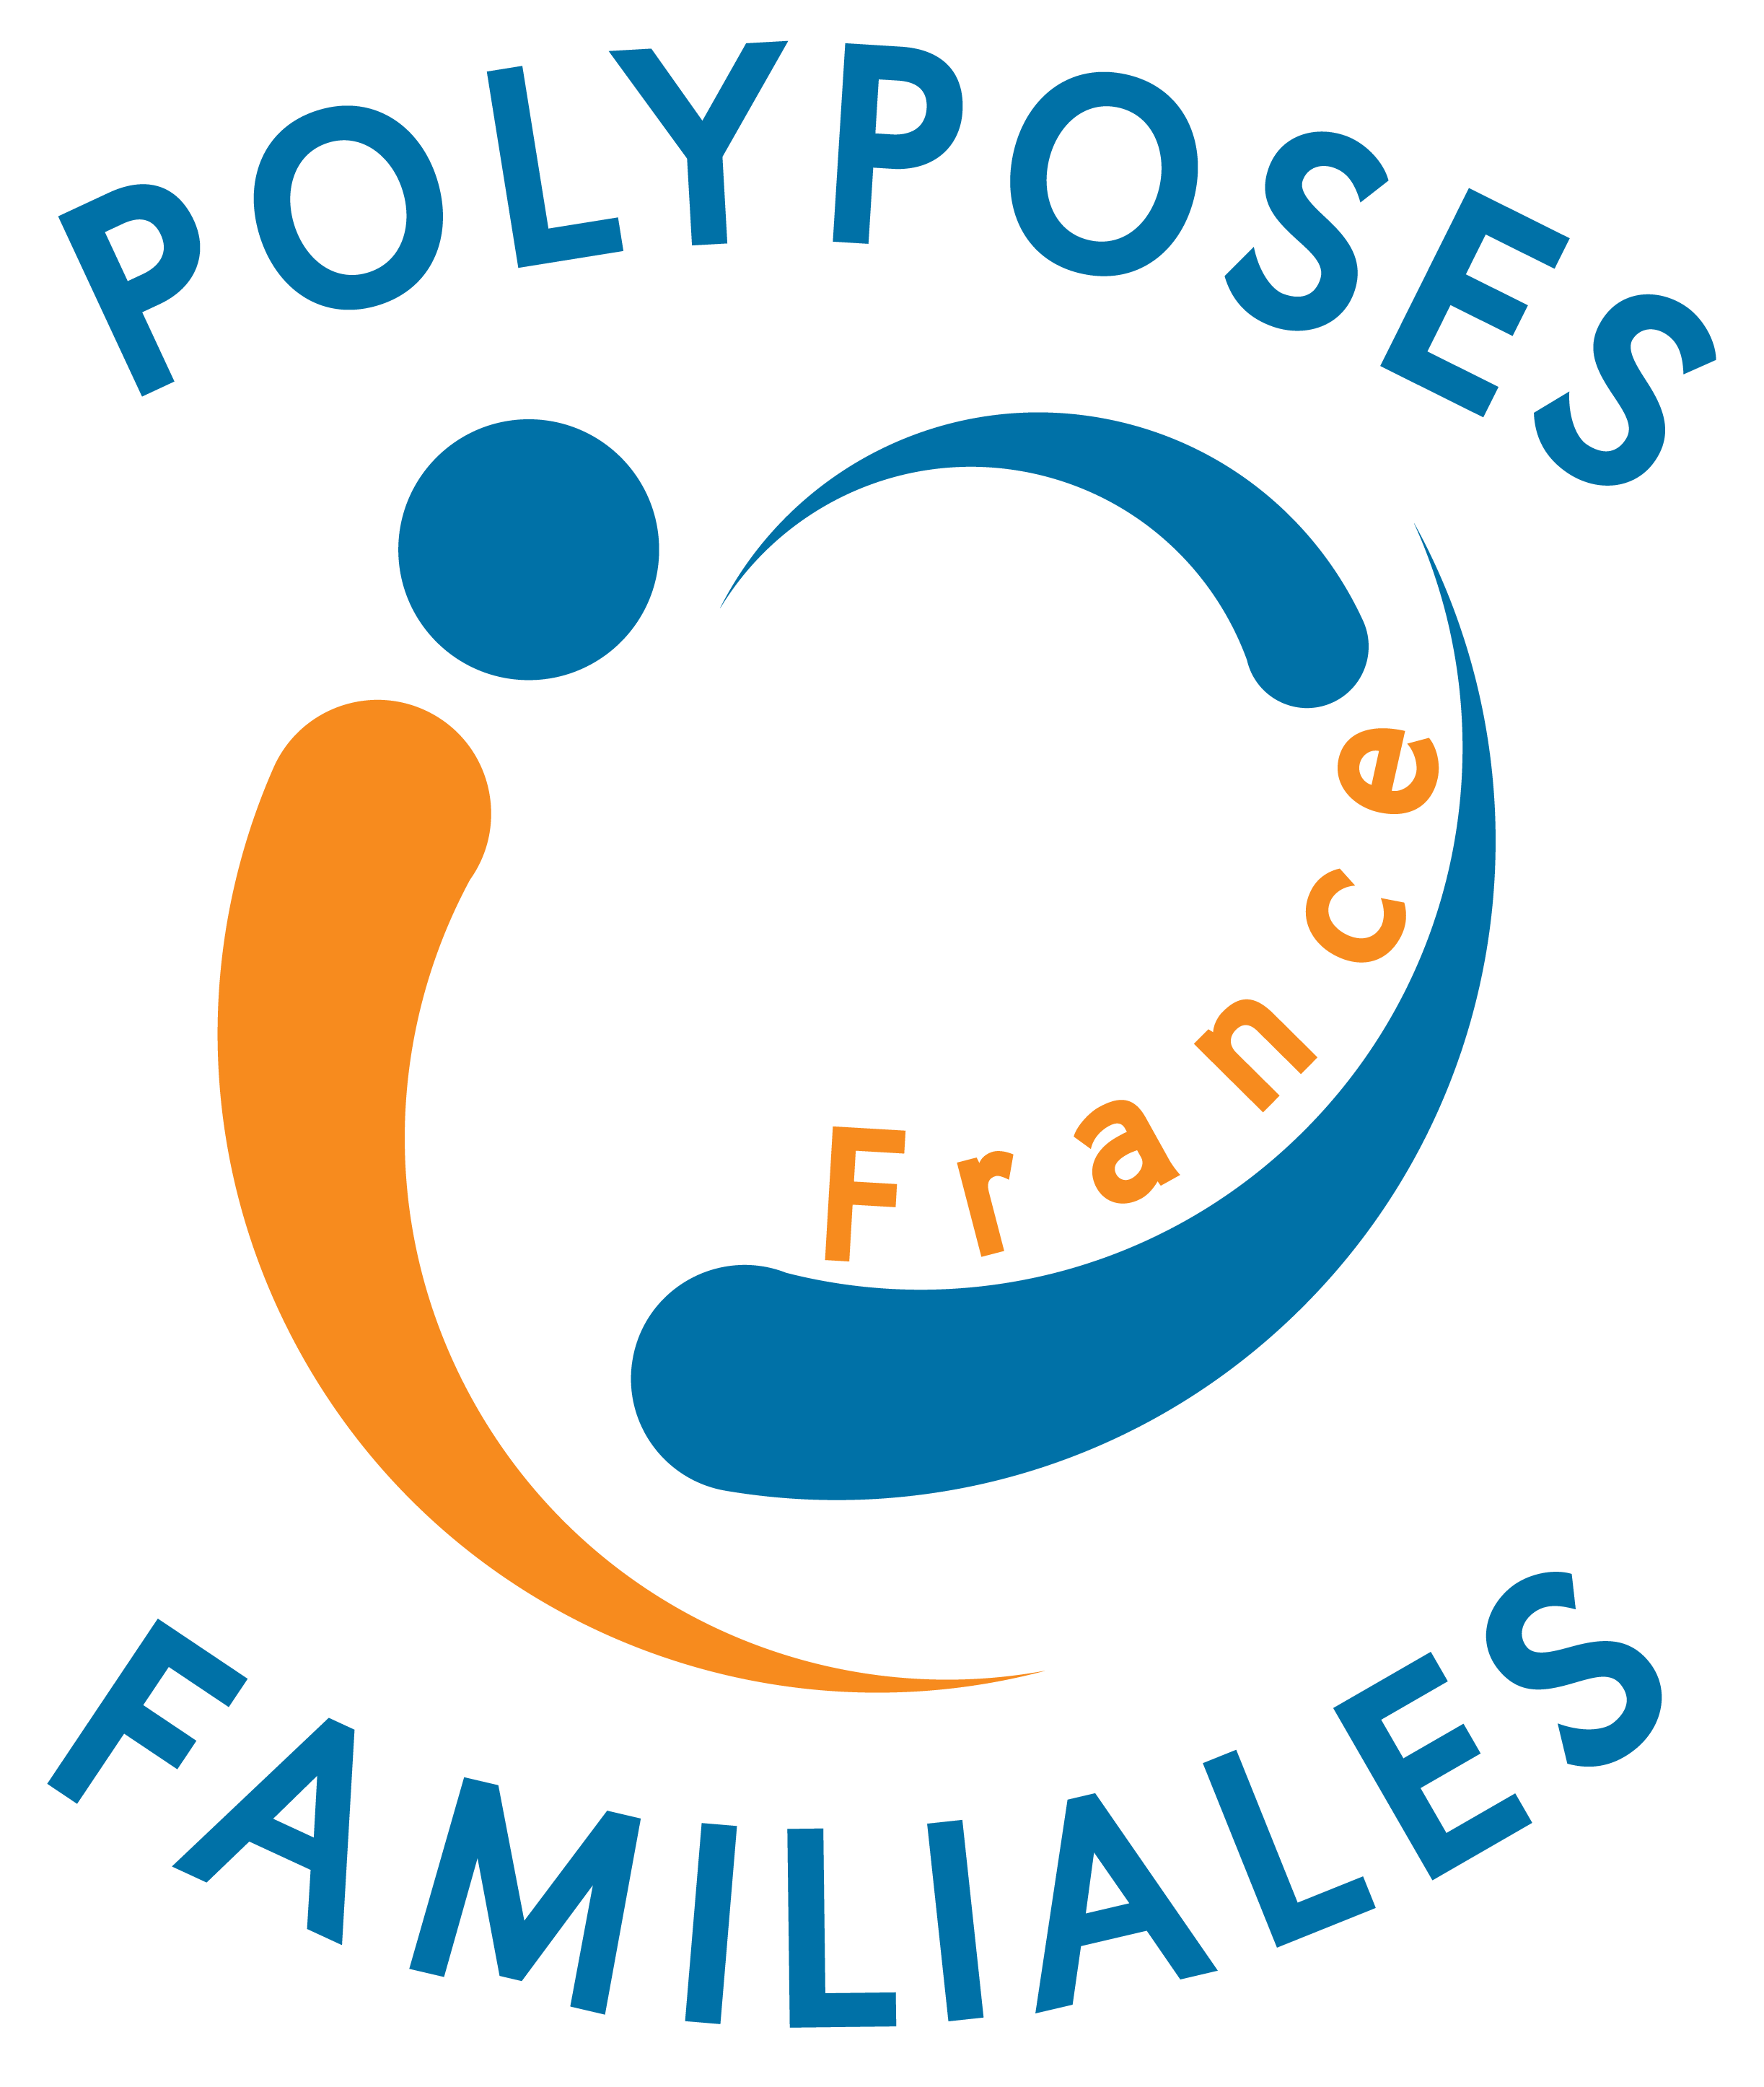 Association POLYPOSES FAMILIALES France (Familial polyposis France association)